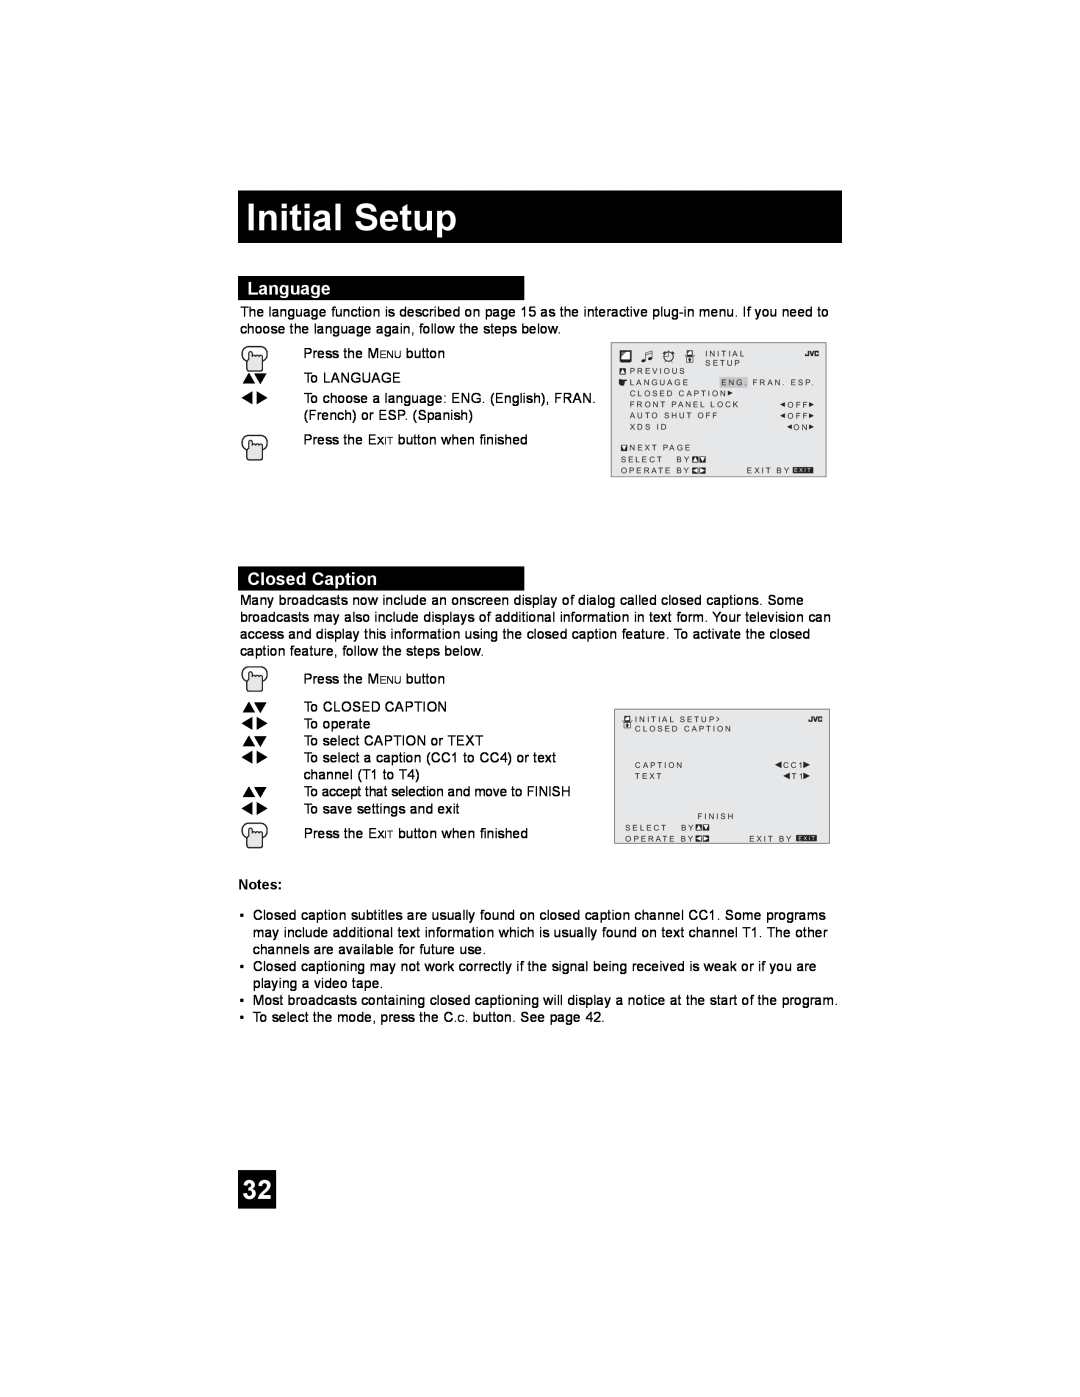 JVC AV 20FA44 manual Language, Closed Caption, Initial Setup 